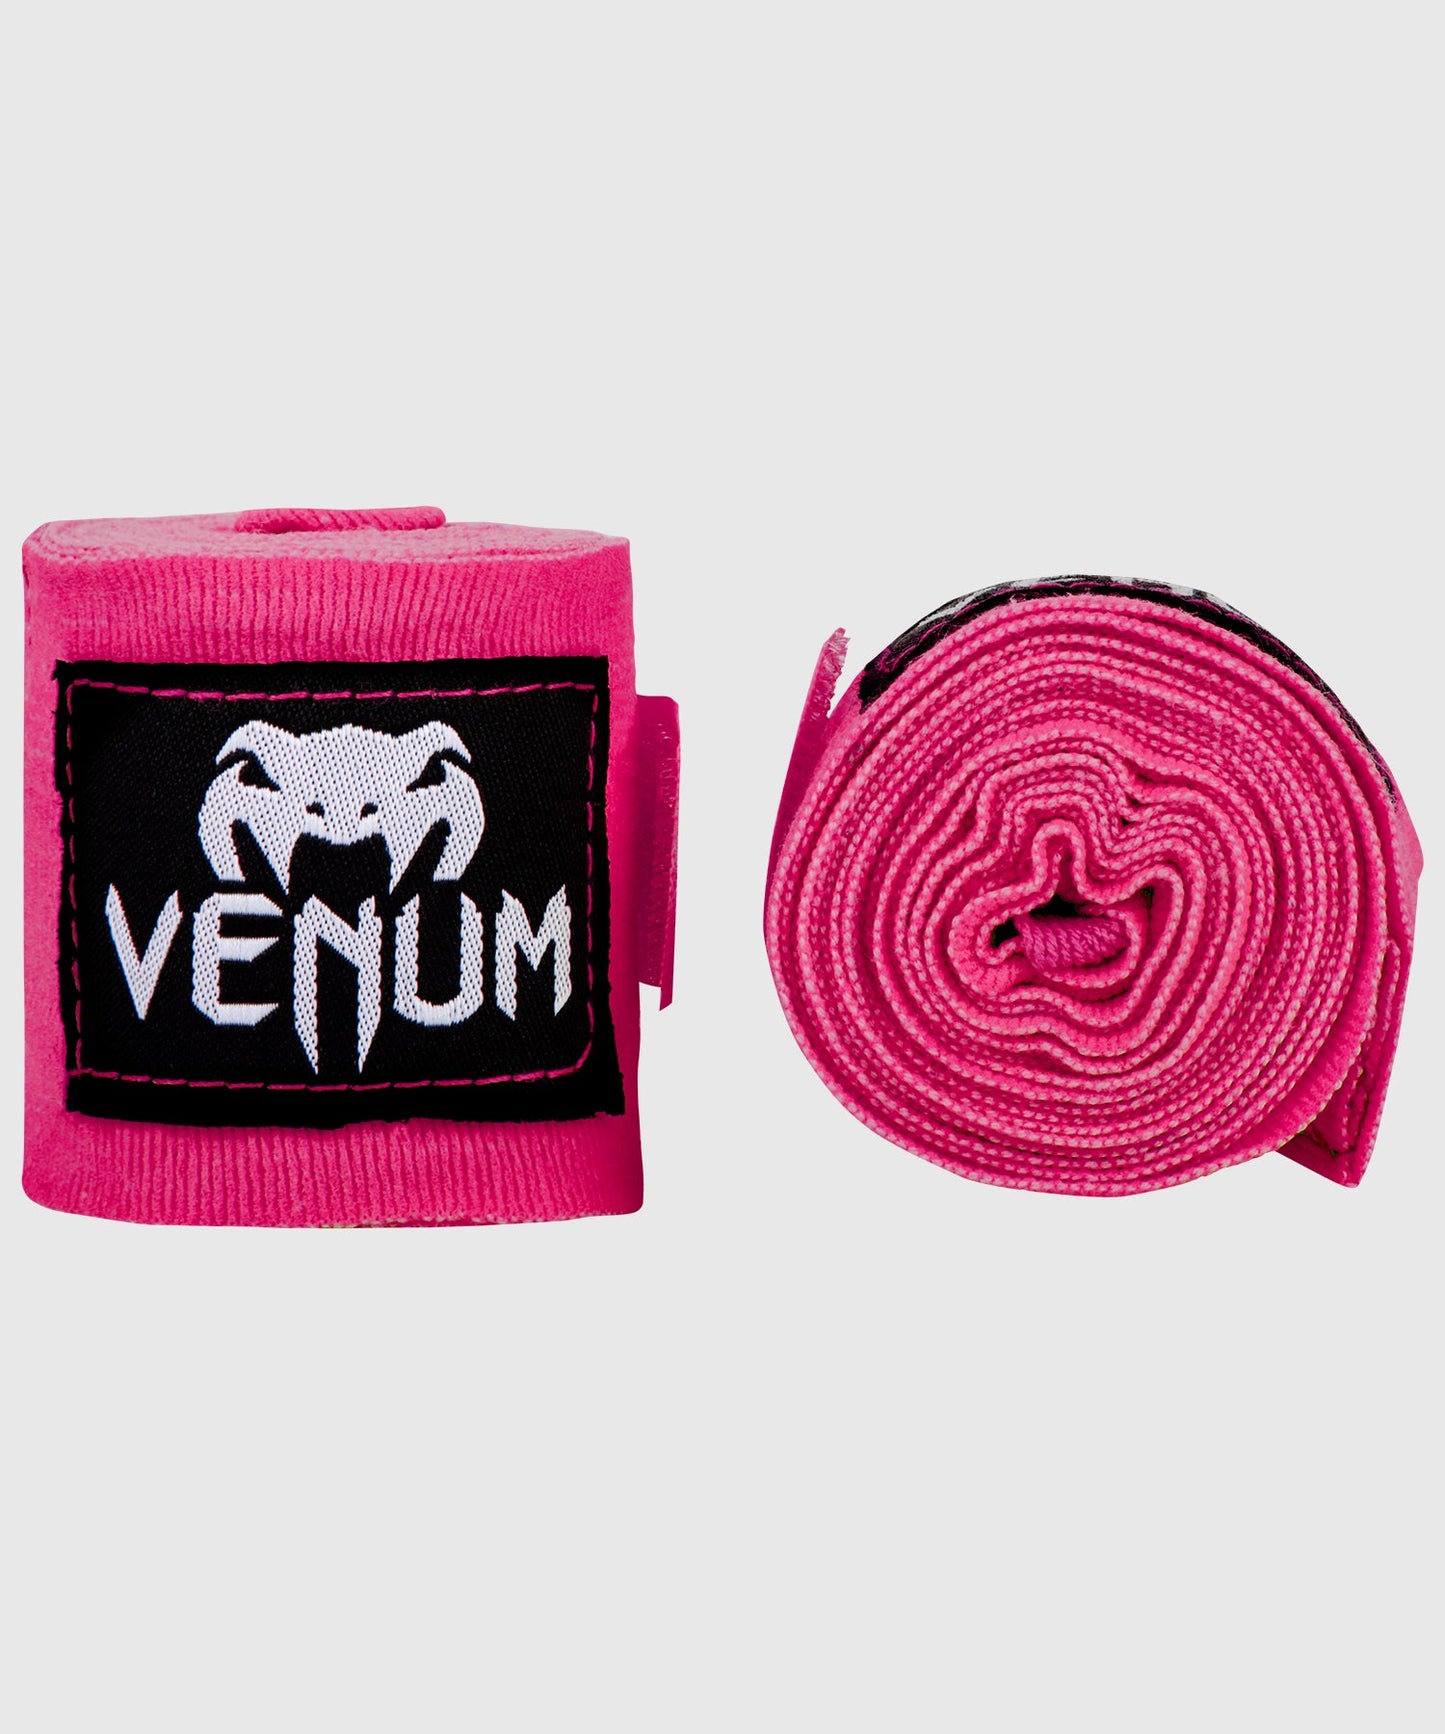 Venum Kontact Boxing Handwraps - 4m - Neo Pink